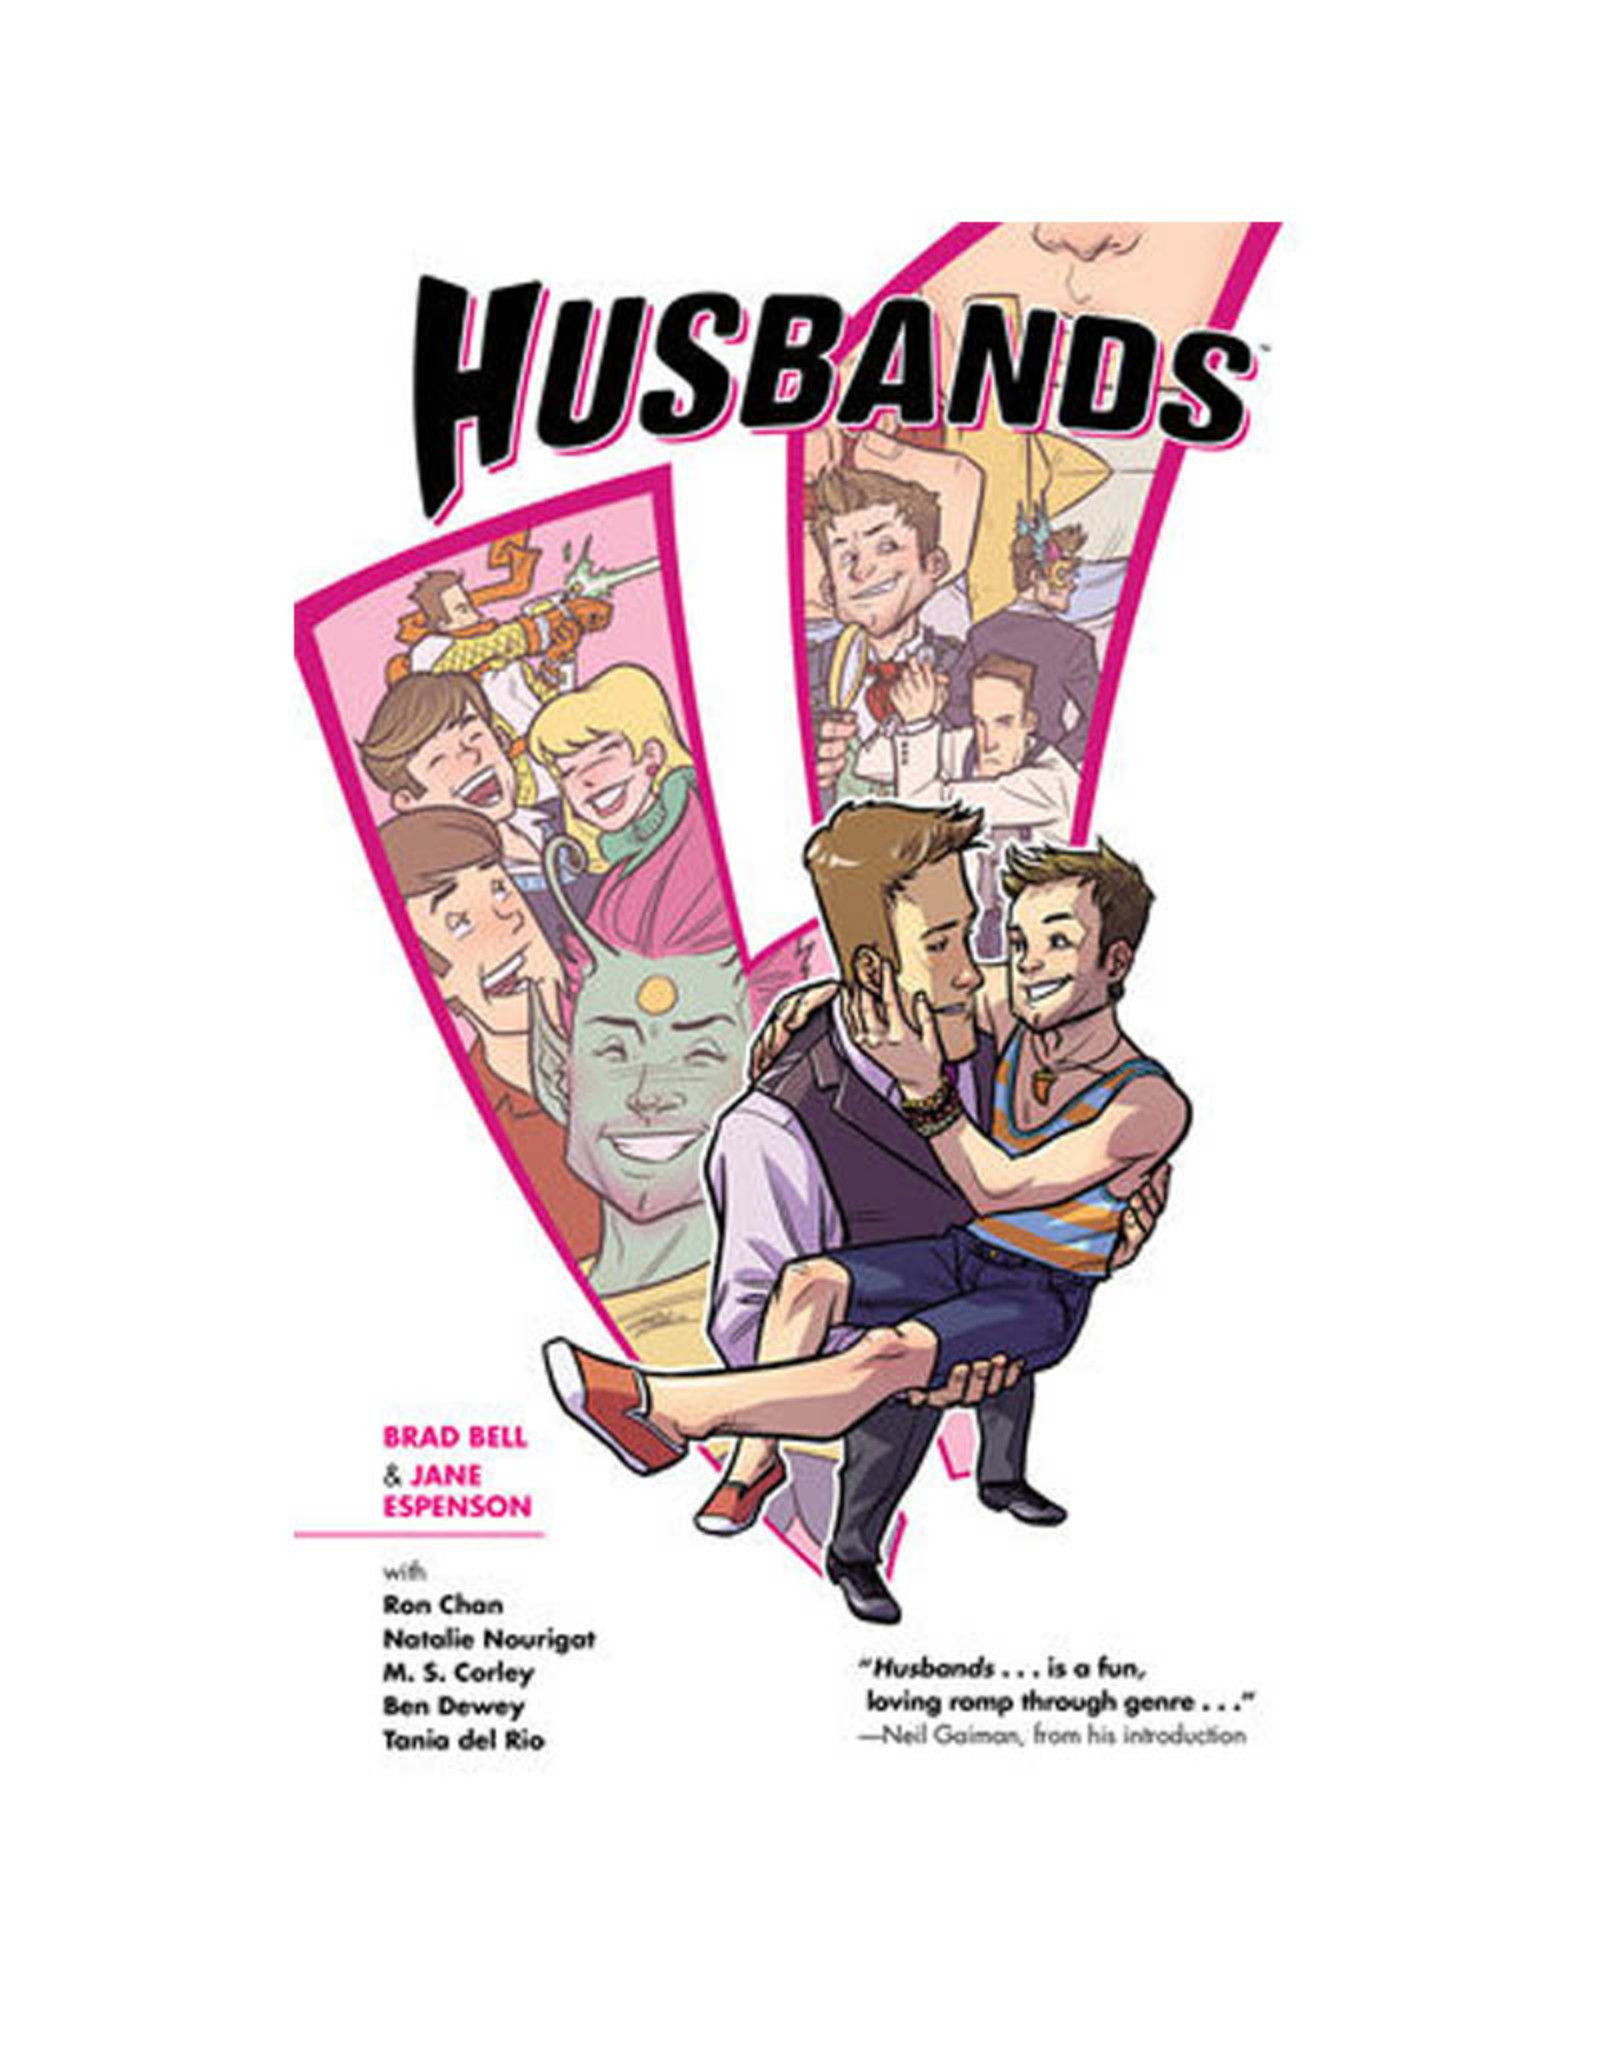 Dark Horse Comics *USED* Husbands Hardcover